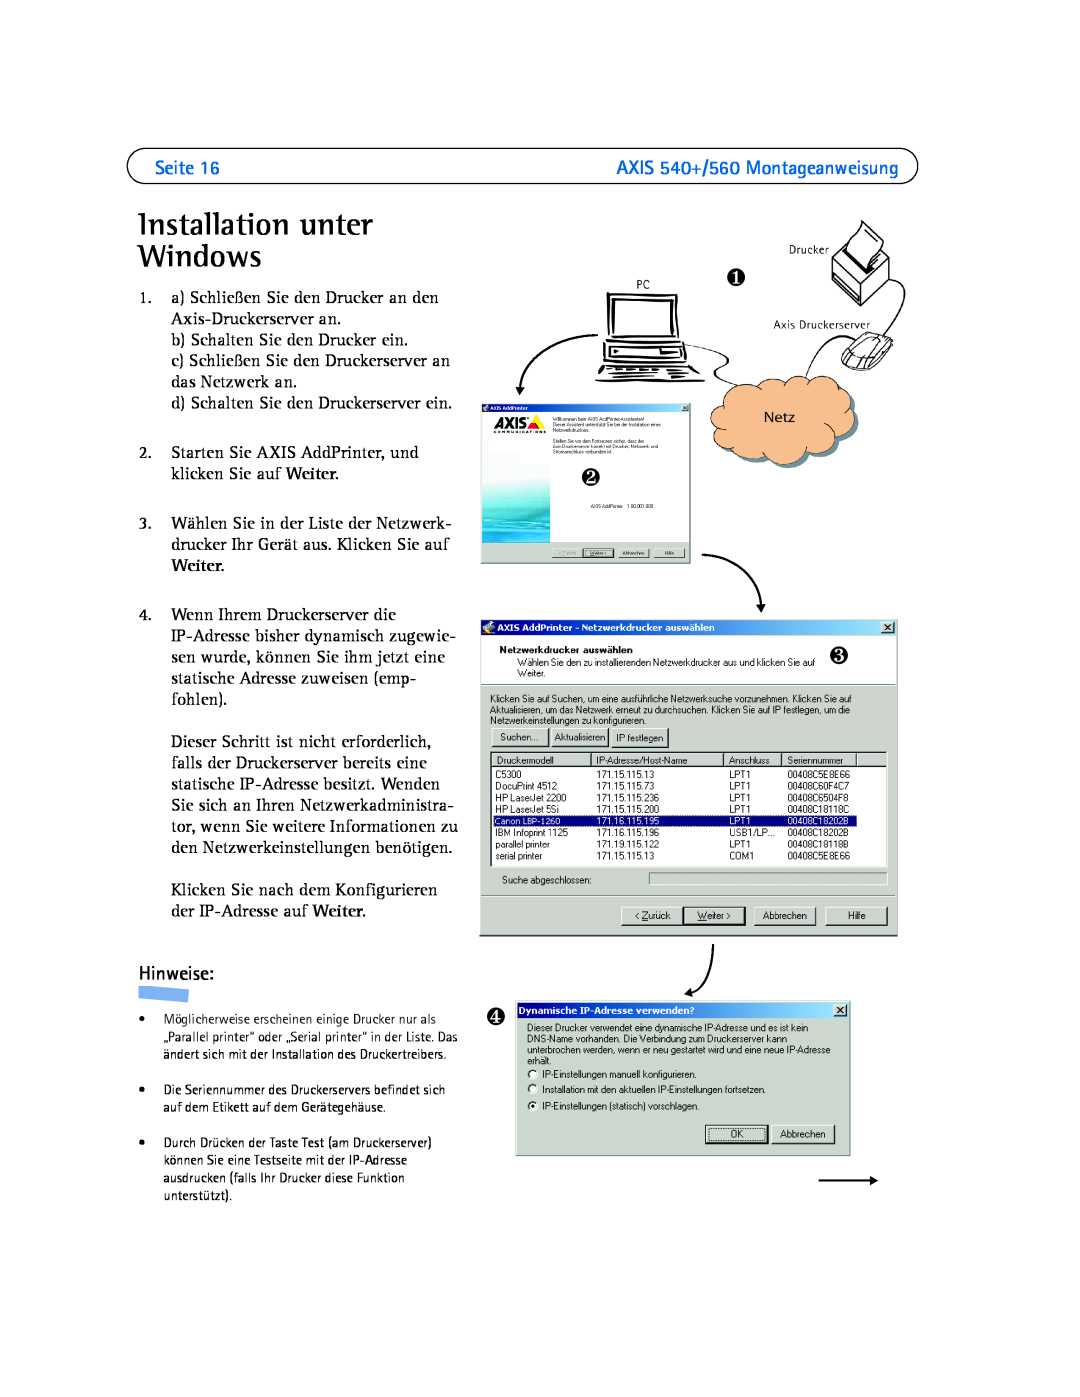 Axis Communications manual Installation unter Windows, Seite, Hinweise, ❶ ❷ ❸, AXIS 540+/560 Montageanweisung 